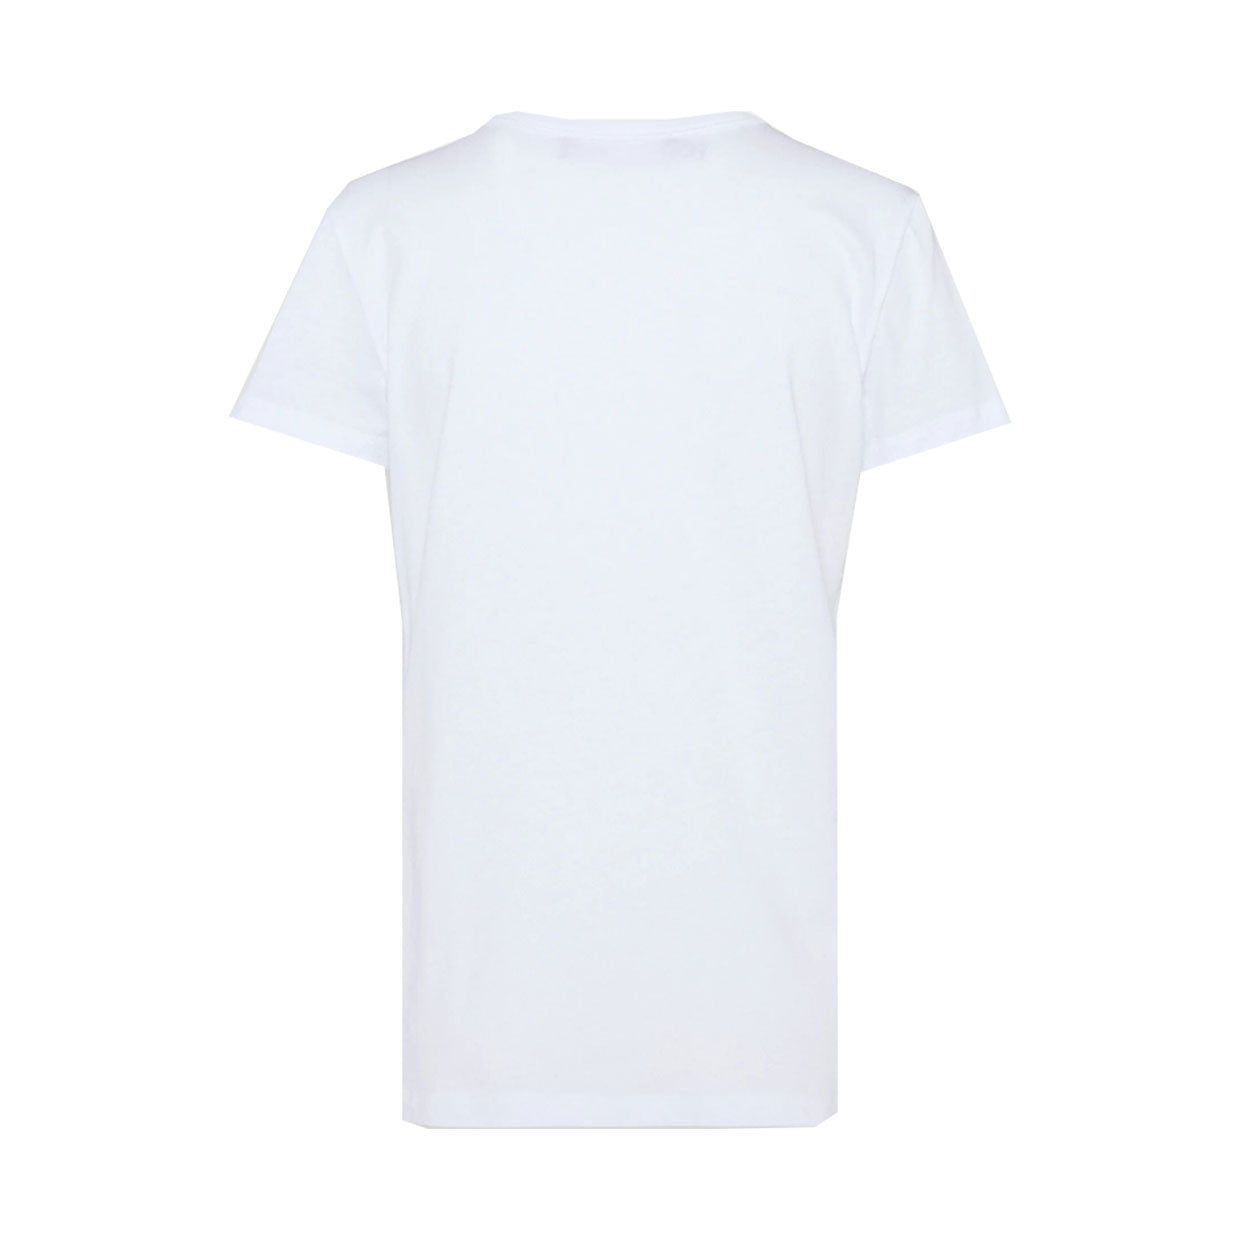 Love Moschino White Heart Design T-Shirt Dress